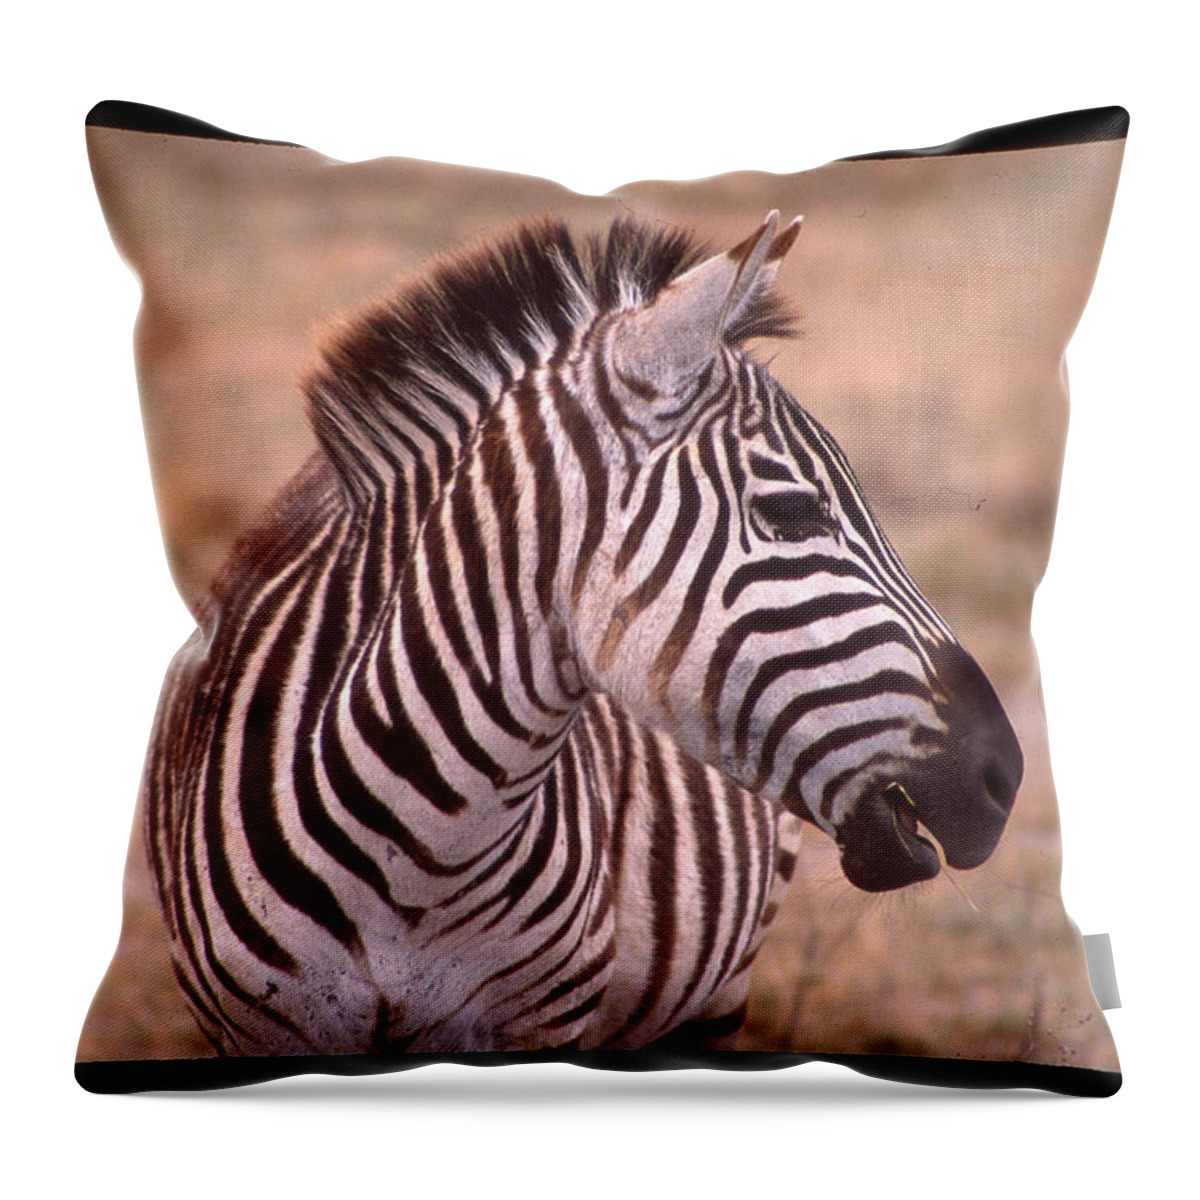 Africa Throw Pillow featuring the photograph Camera Shy Zebra by Russ Considine